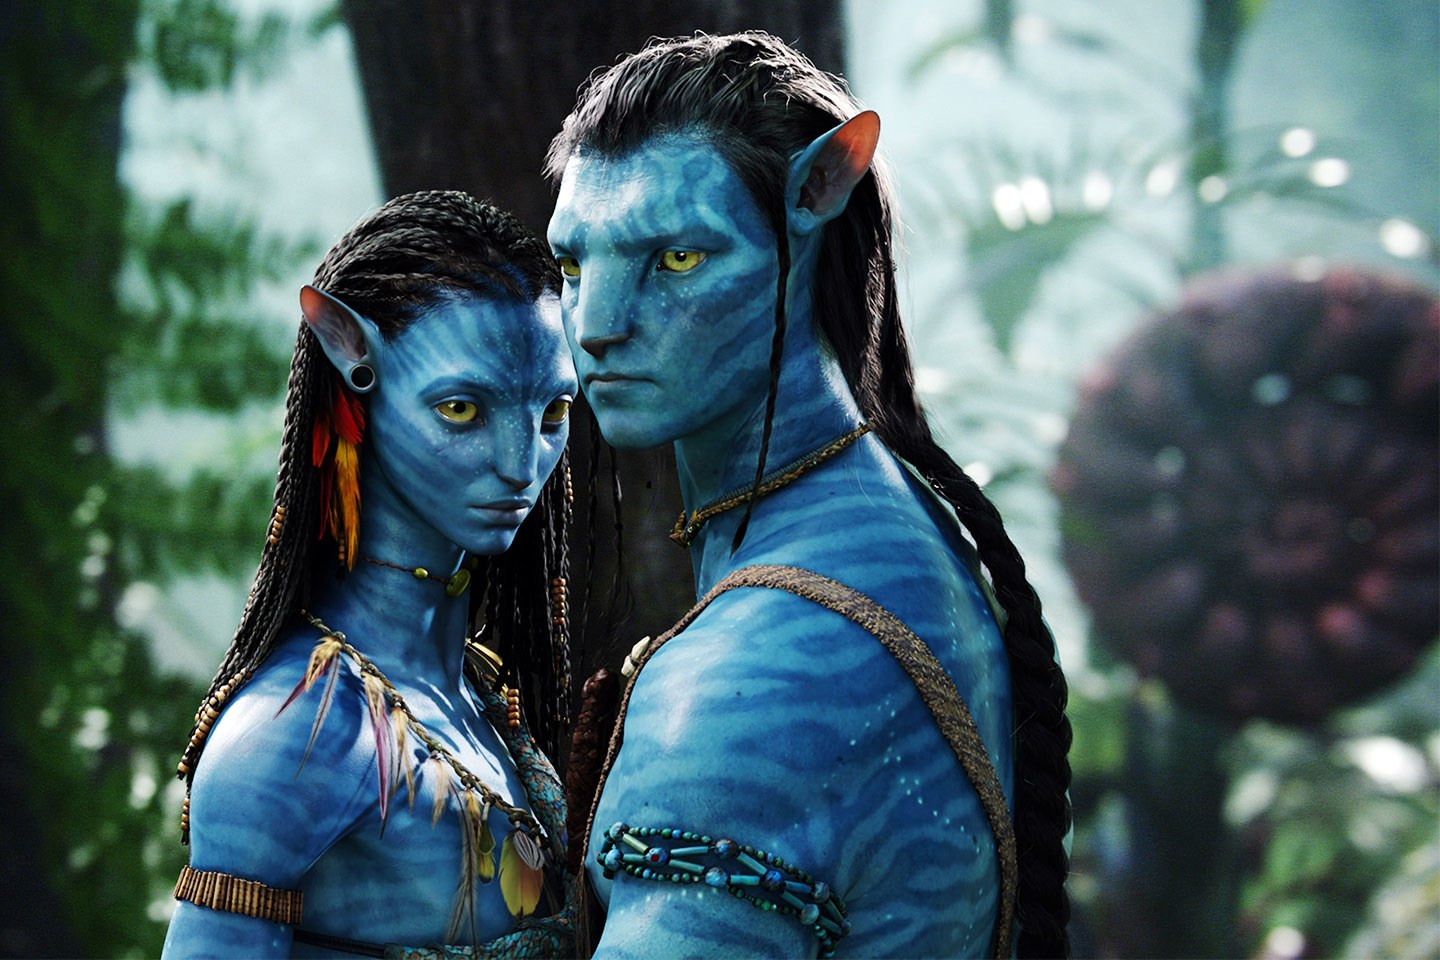 Atriz de Game of Thrones entra pro elenco de Avatar